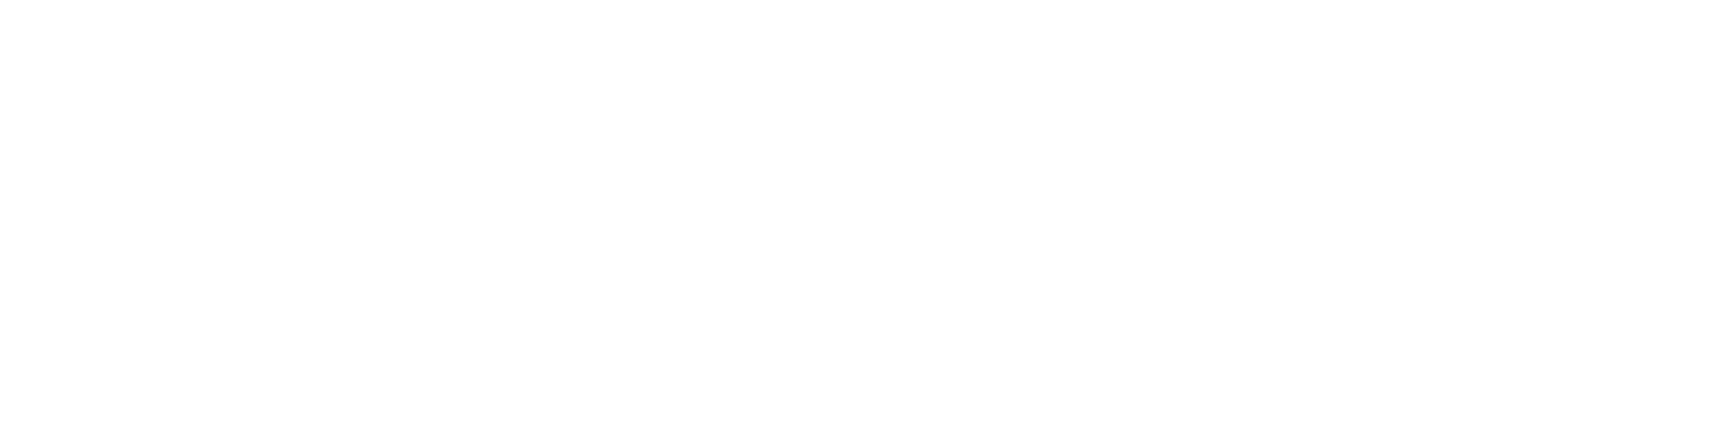 Teleassistance logo RVB